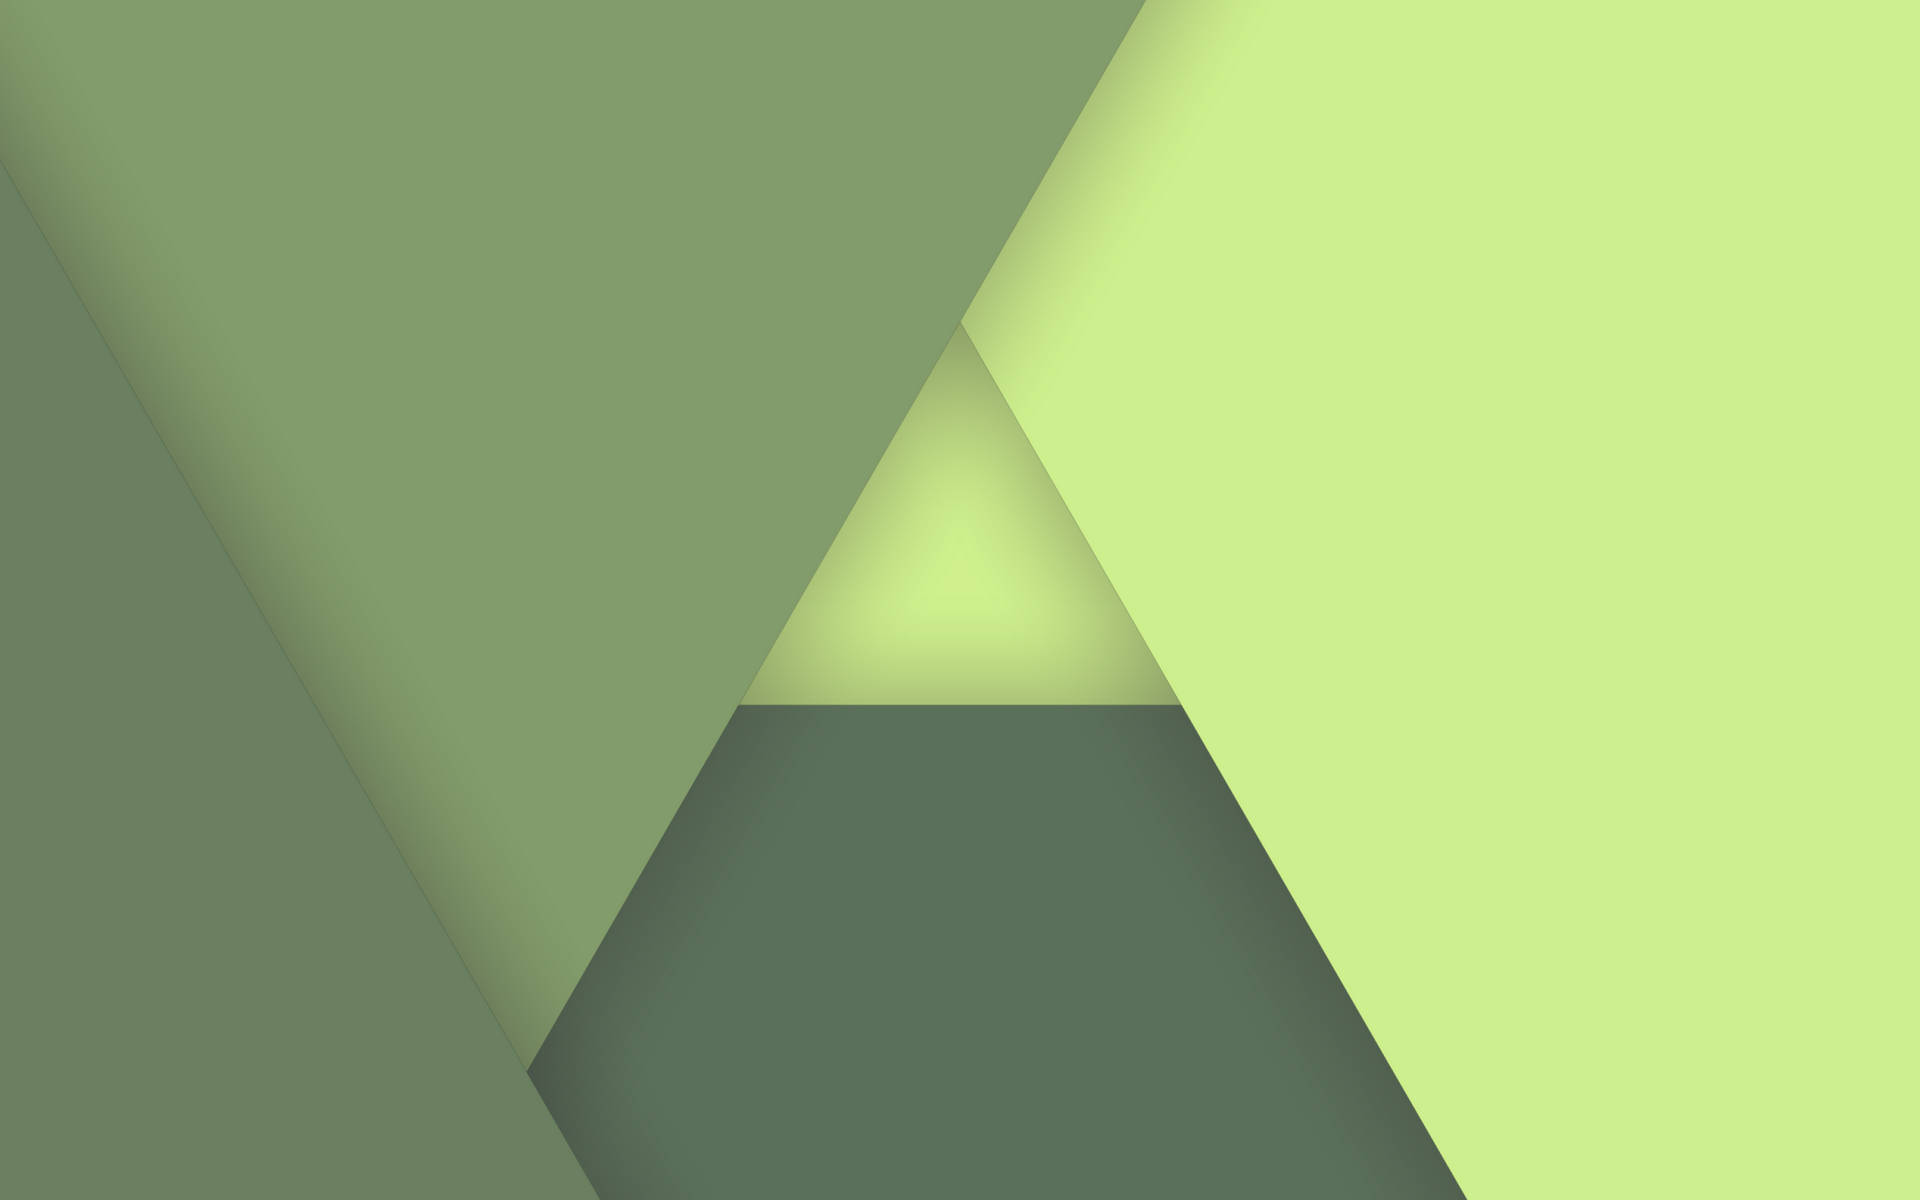 Static Green Triangles Wallpaper